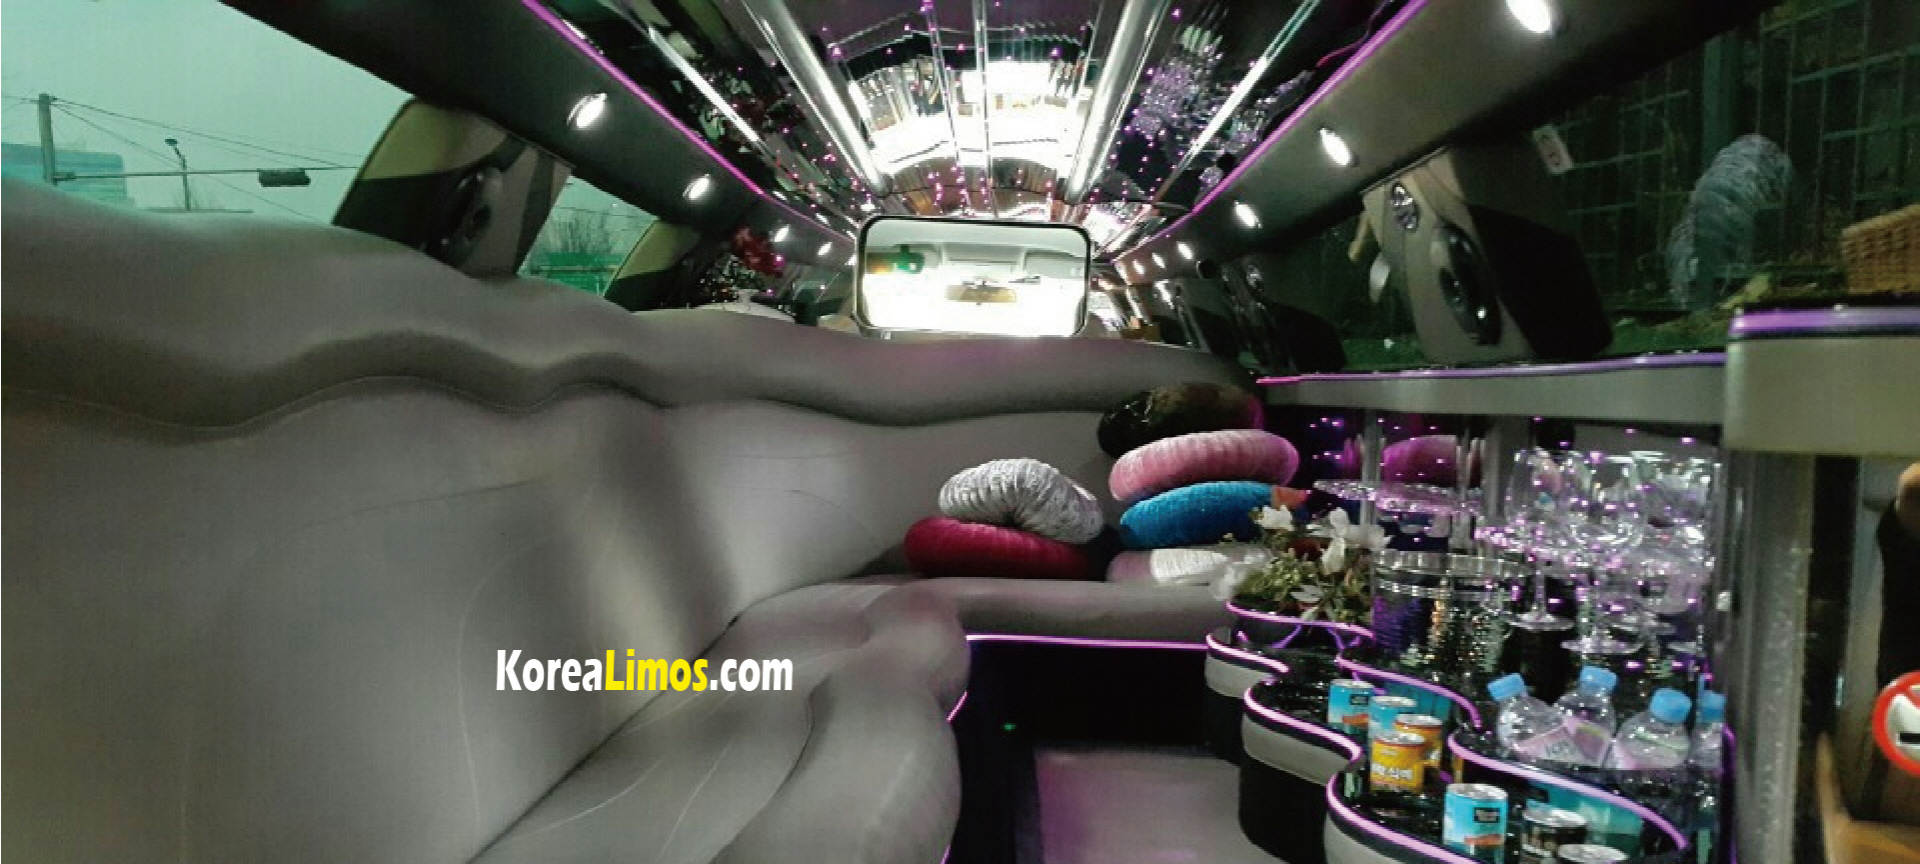 Korea limo car service